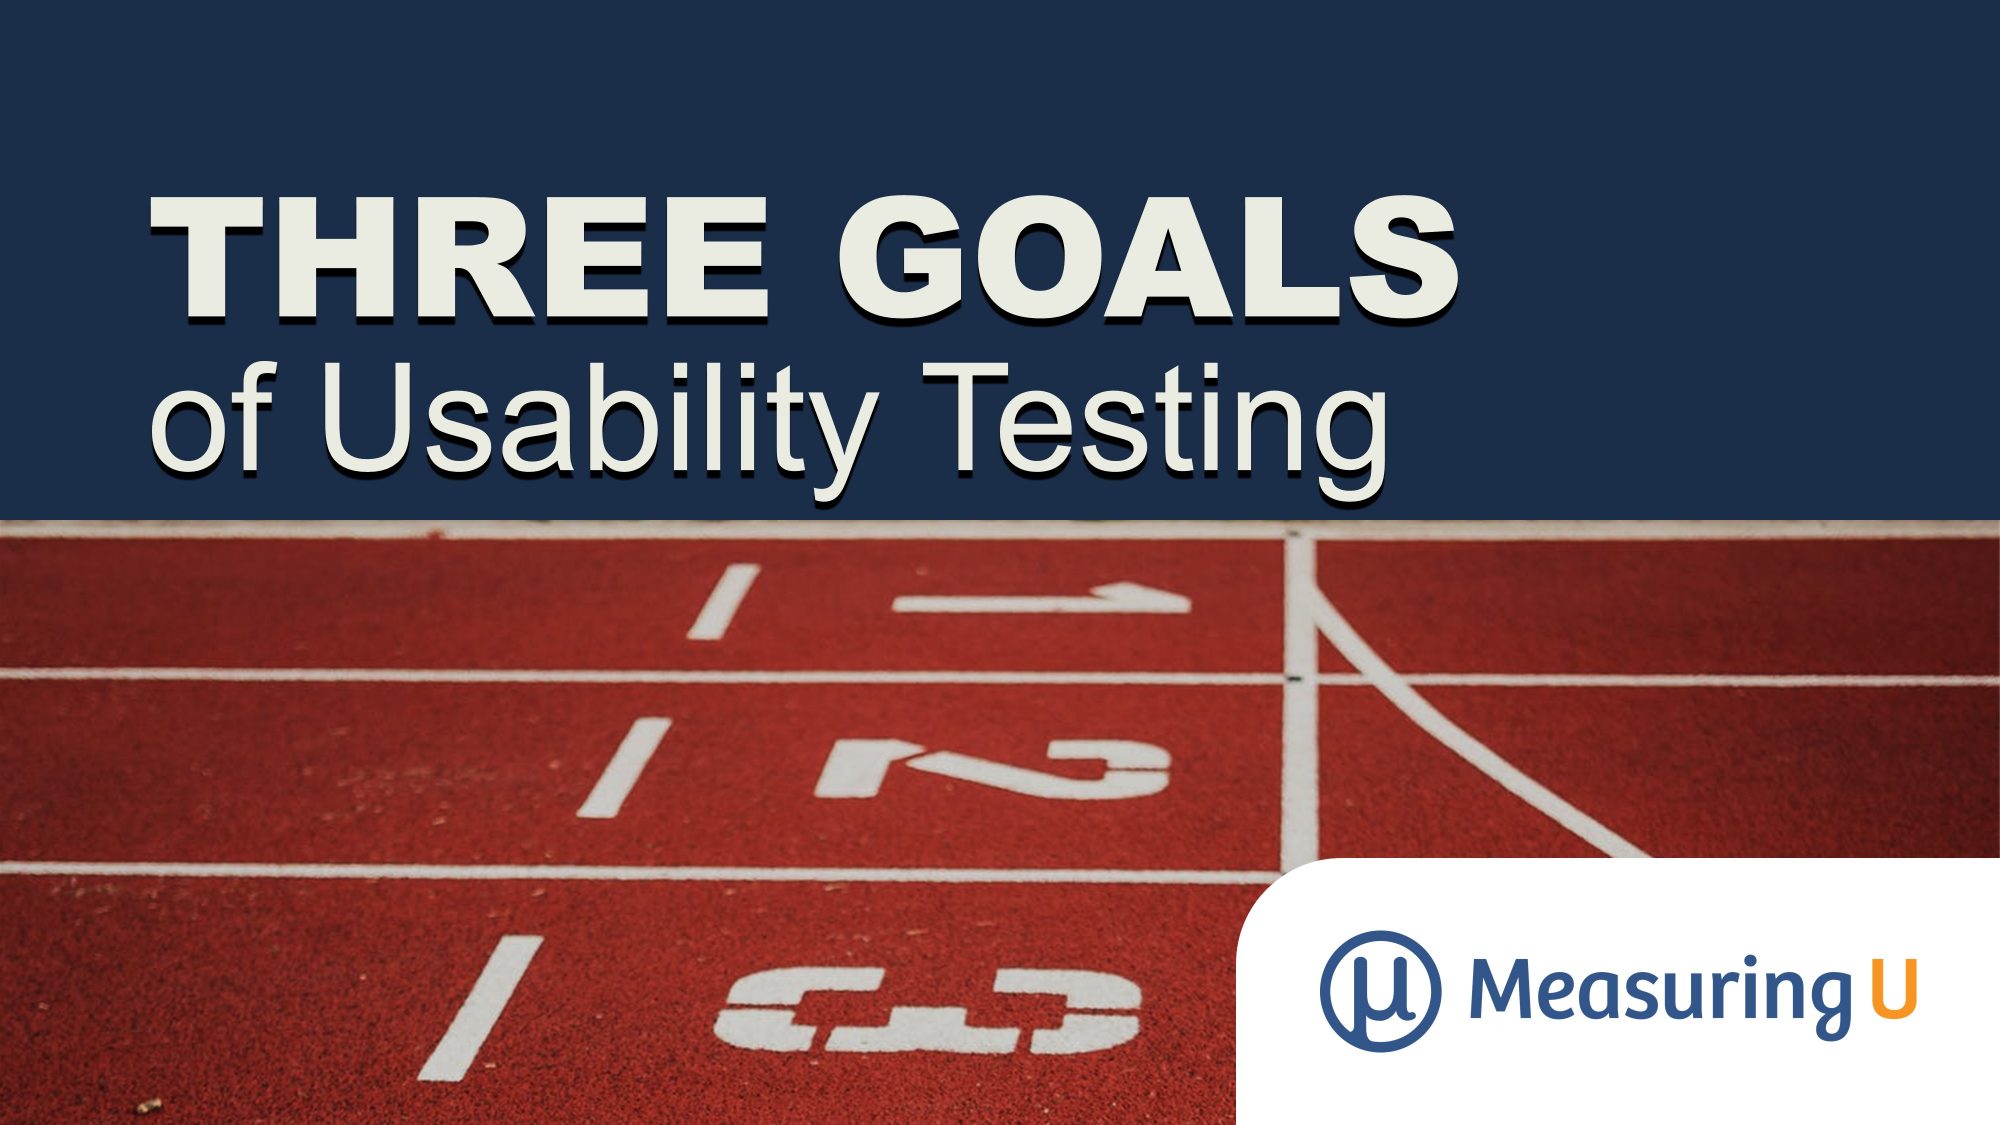 5 Benefits of Remote Usability Testing MeasuringU